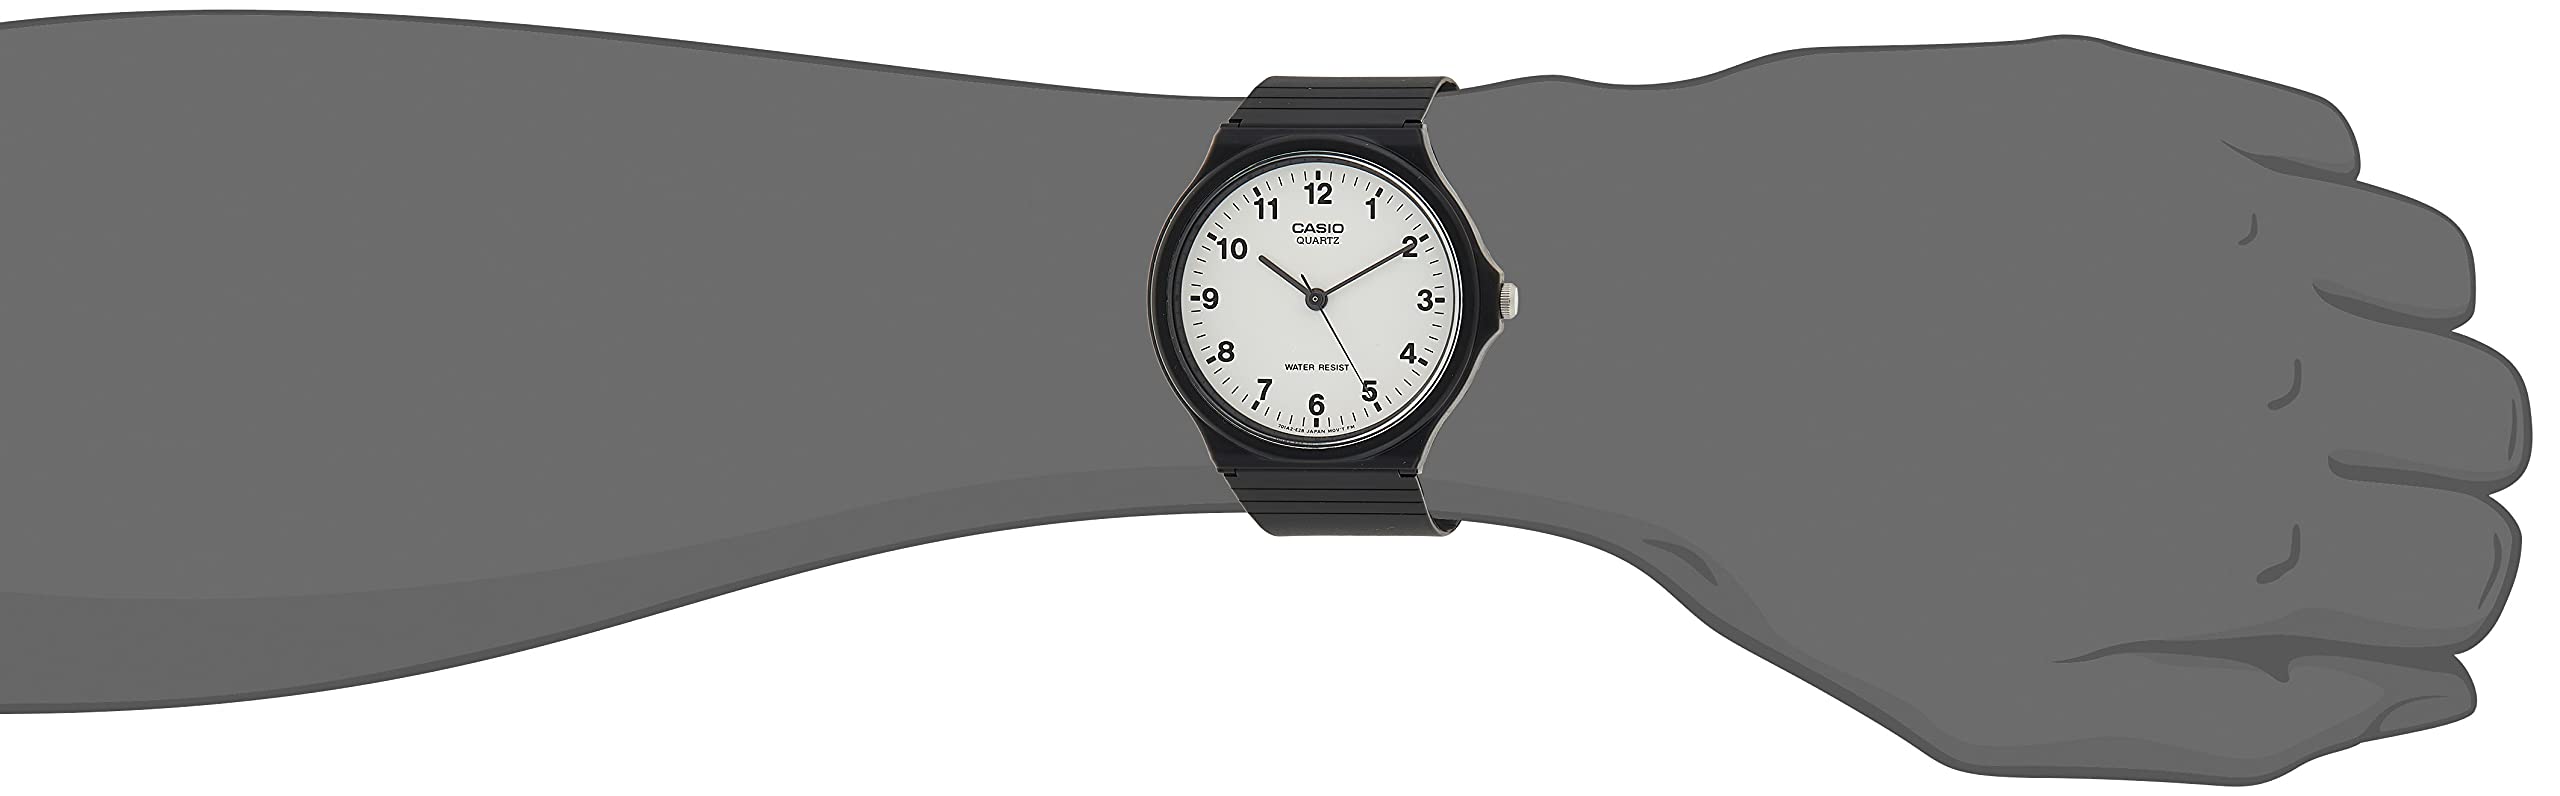 Casio Men's Quartz Resin Casual Watch, Color:Black (Model: MQ24-7B)